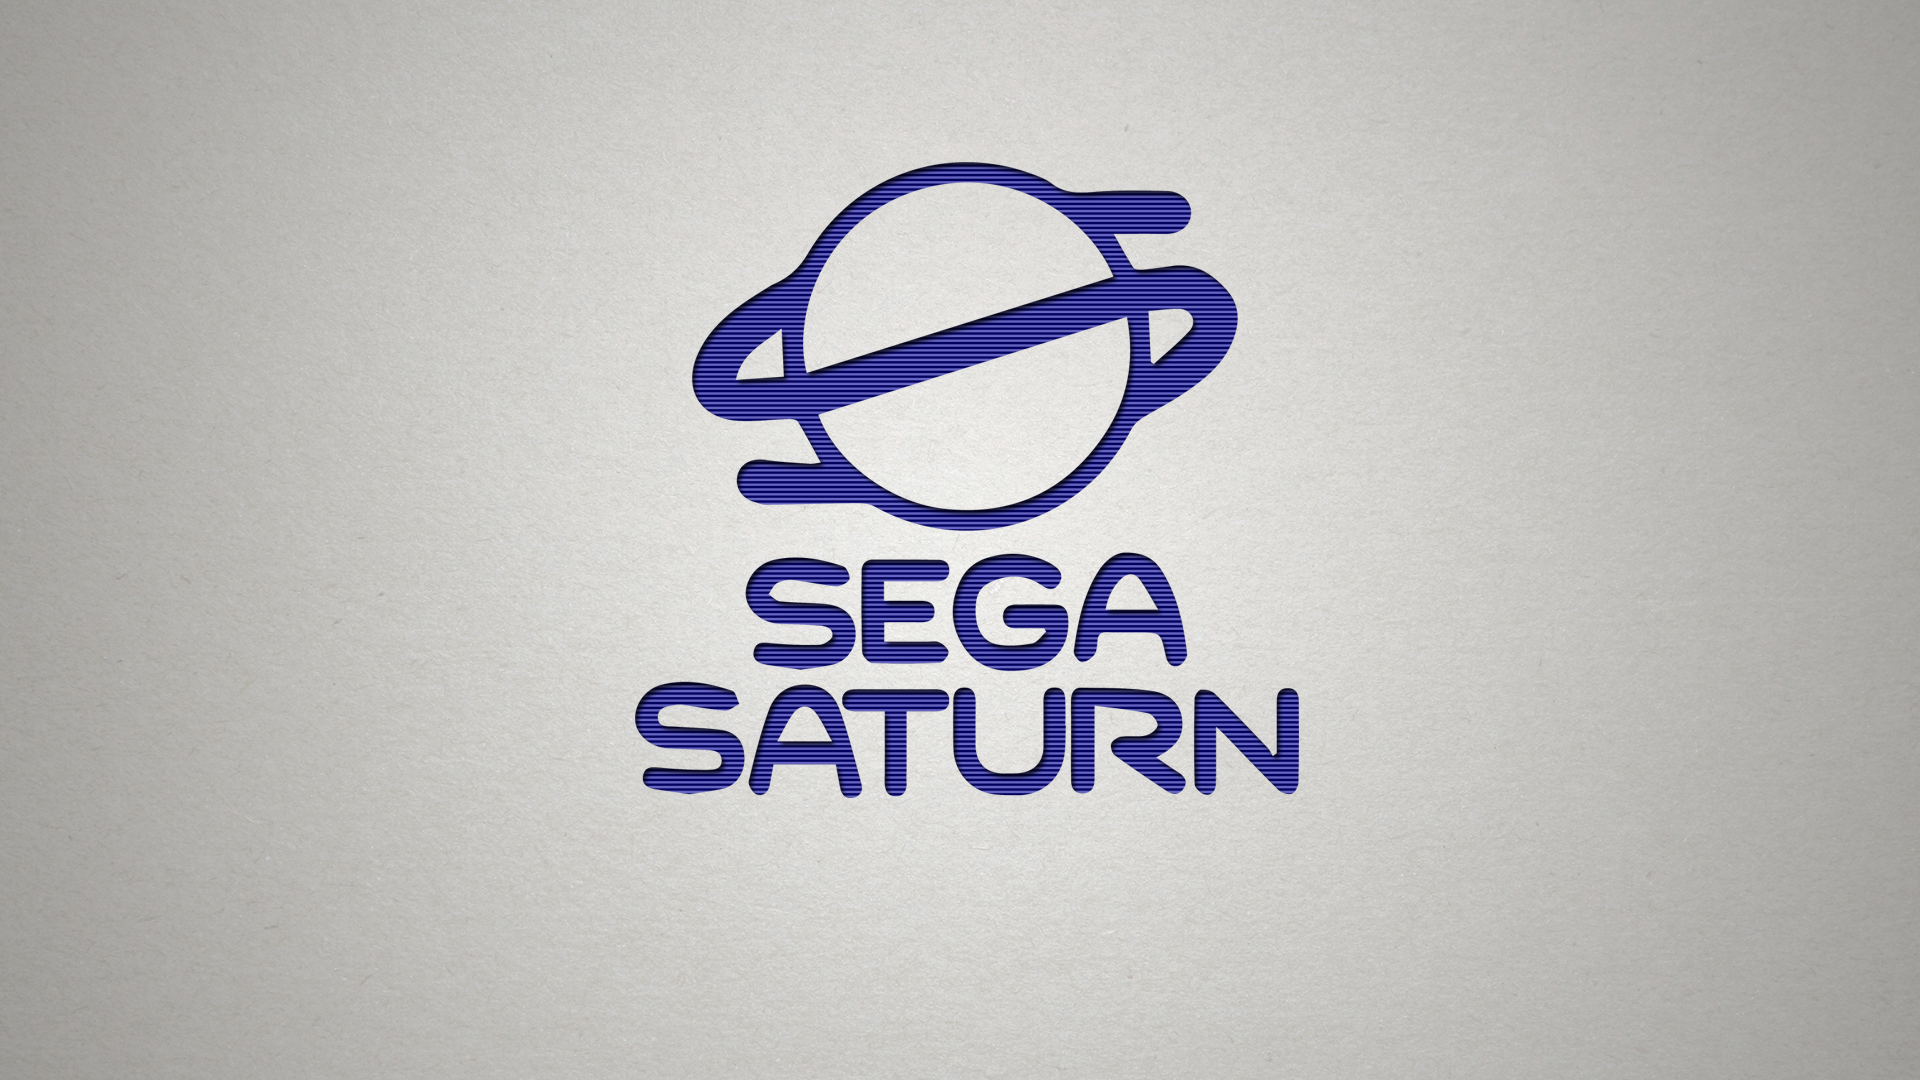 Sega Saturn HD Wallpaper Background